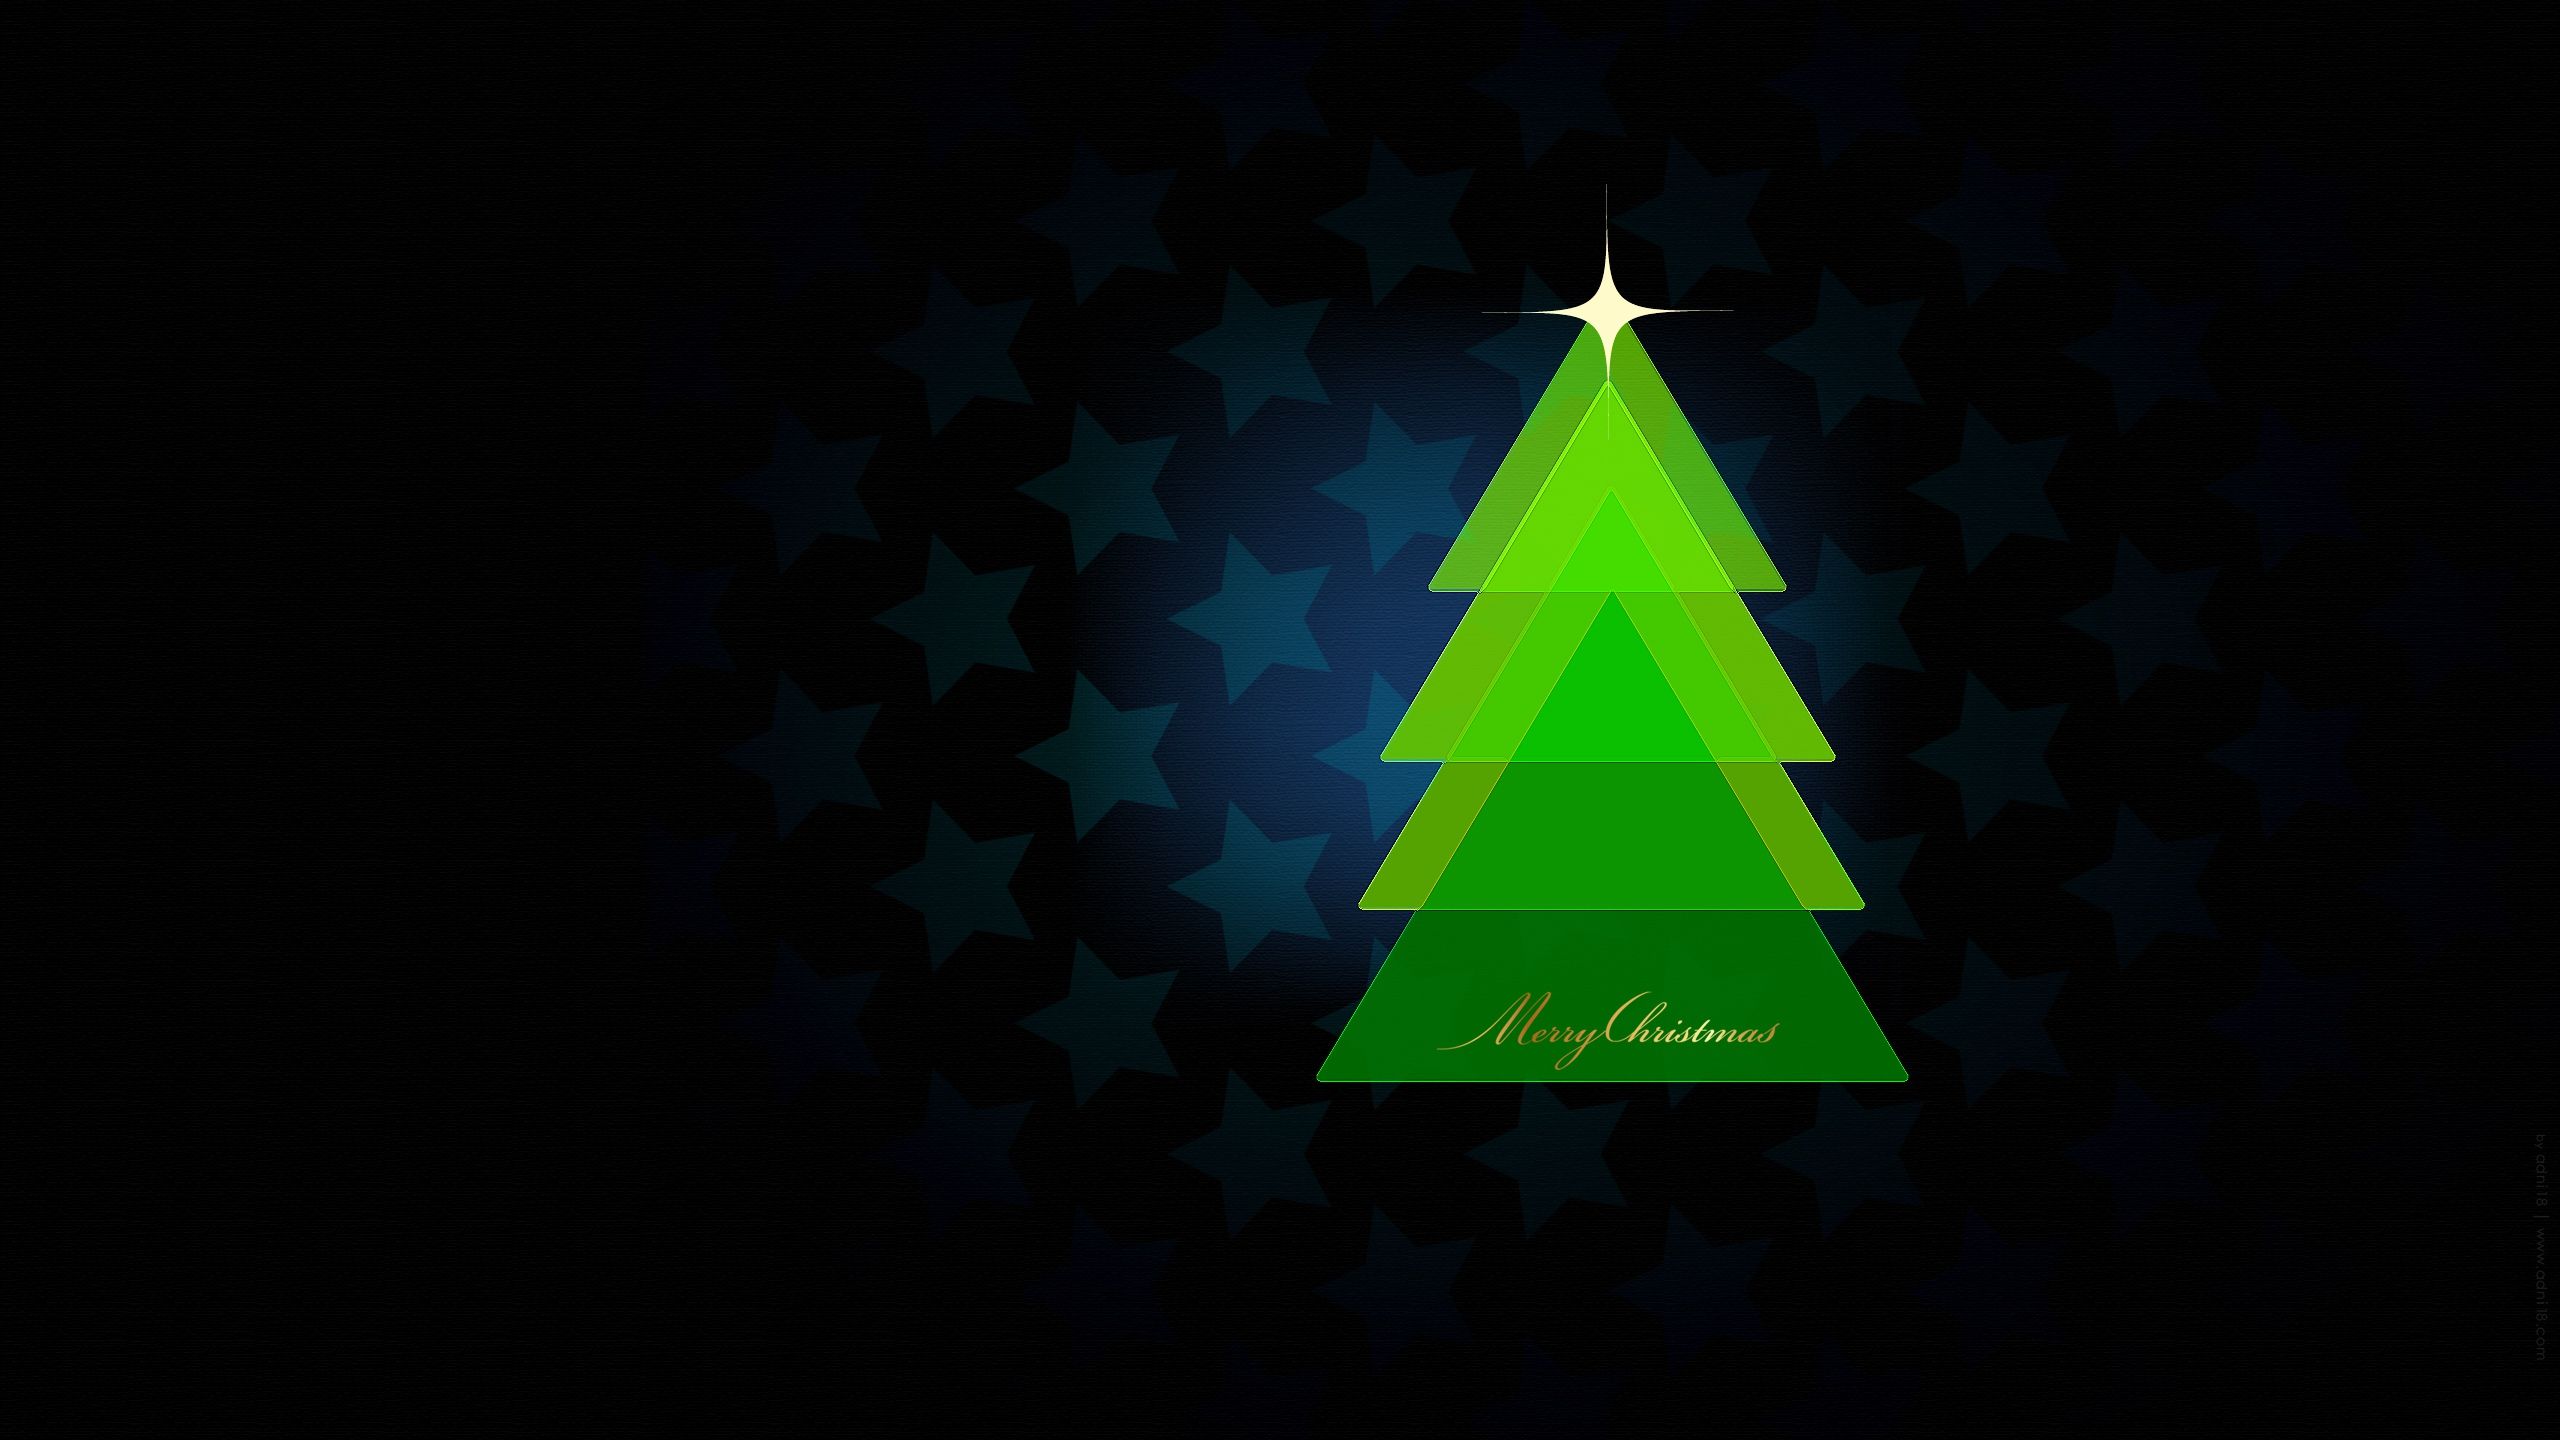 Free High Resolution Christmas themes, wallpaper and icons. Christmas greetings Cards